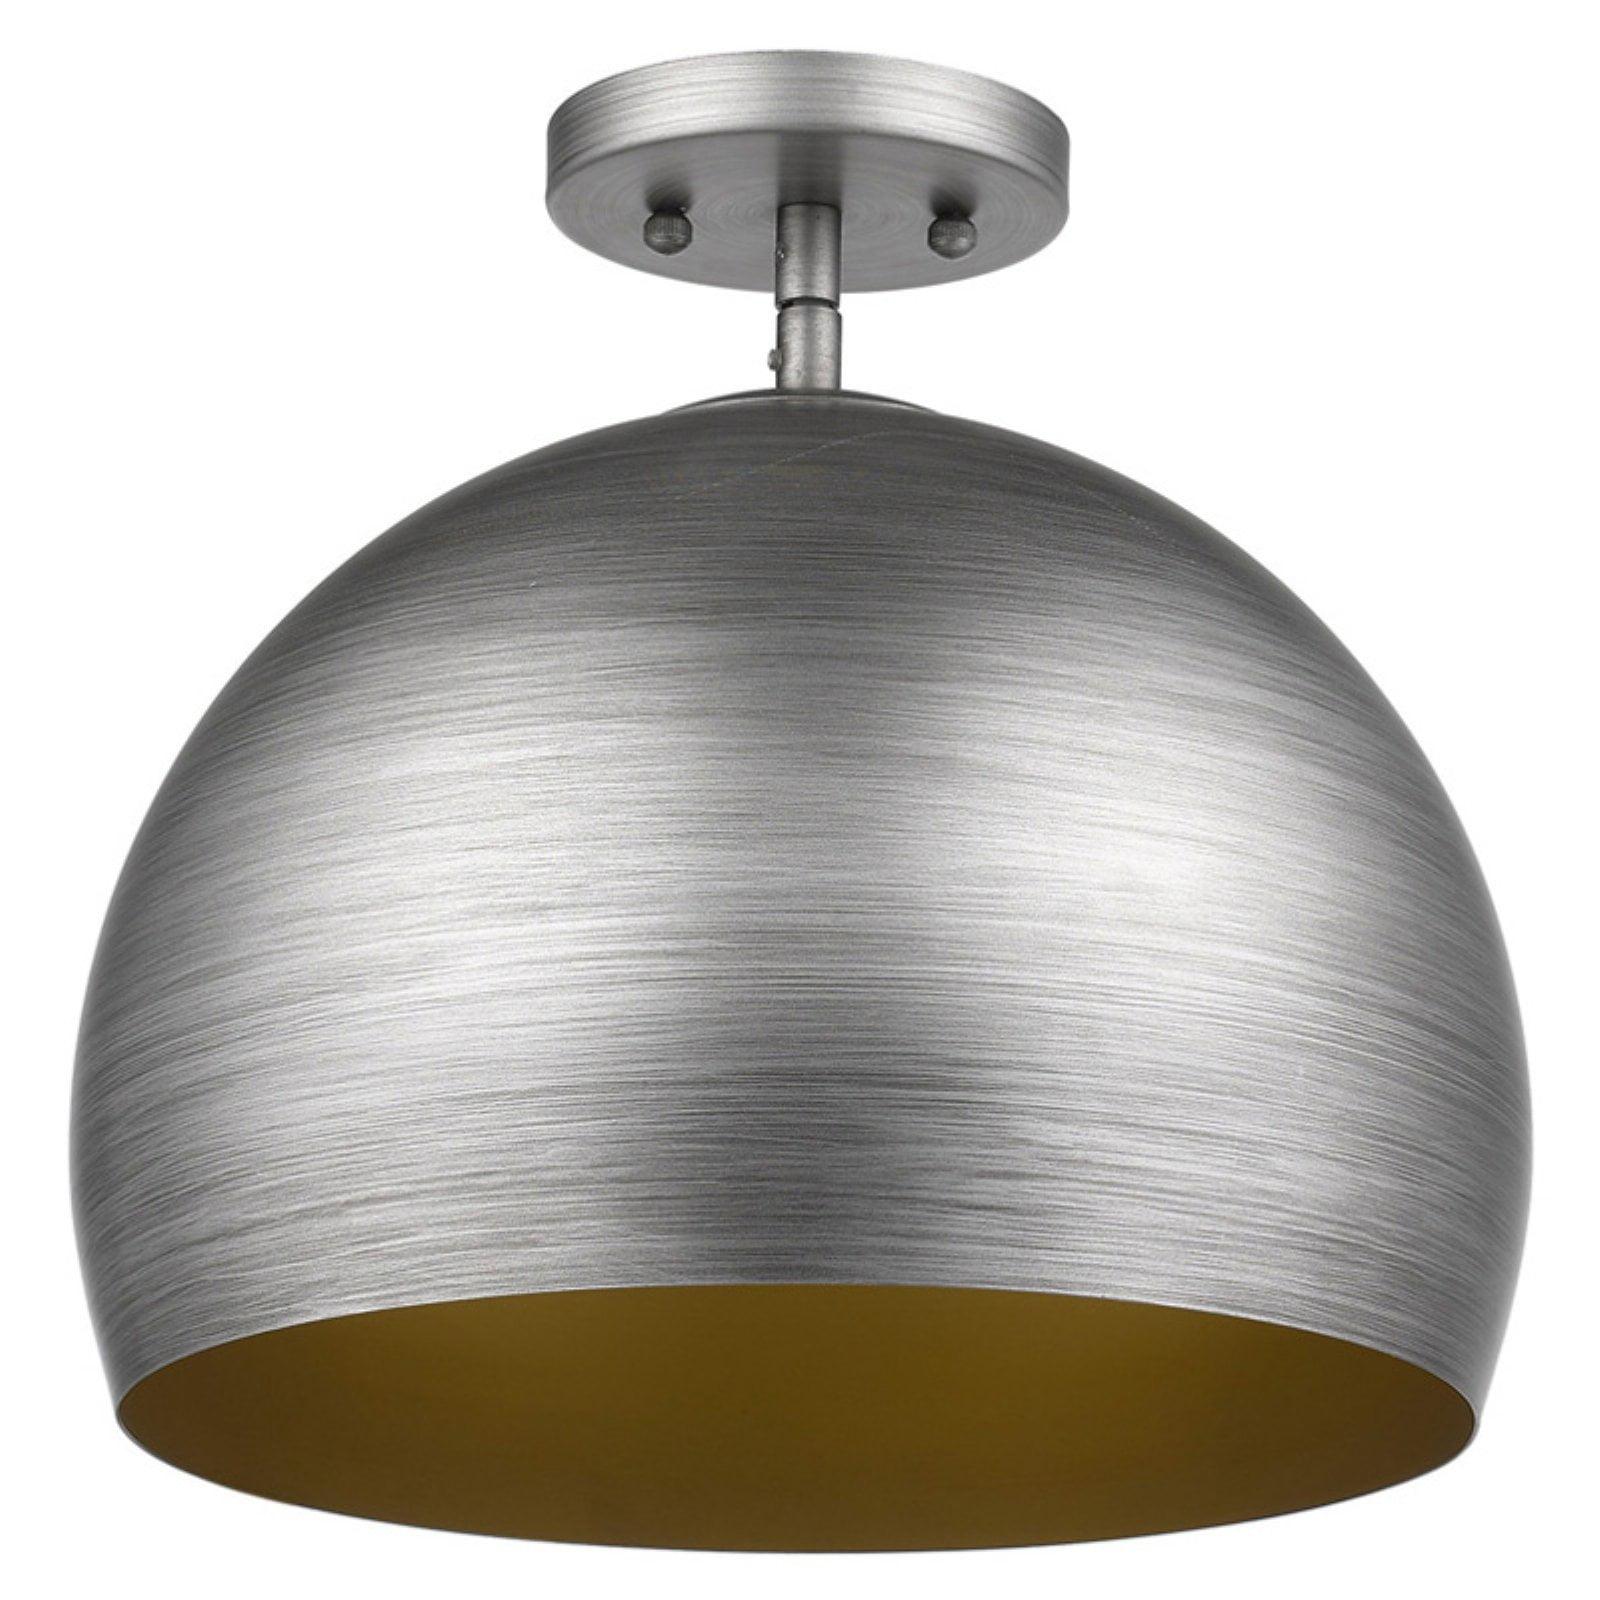 Sleek Modern Pewter and Gold Bowl Pendant Light 13.75"